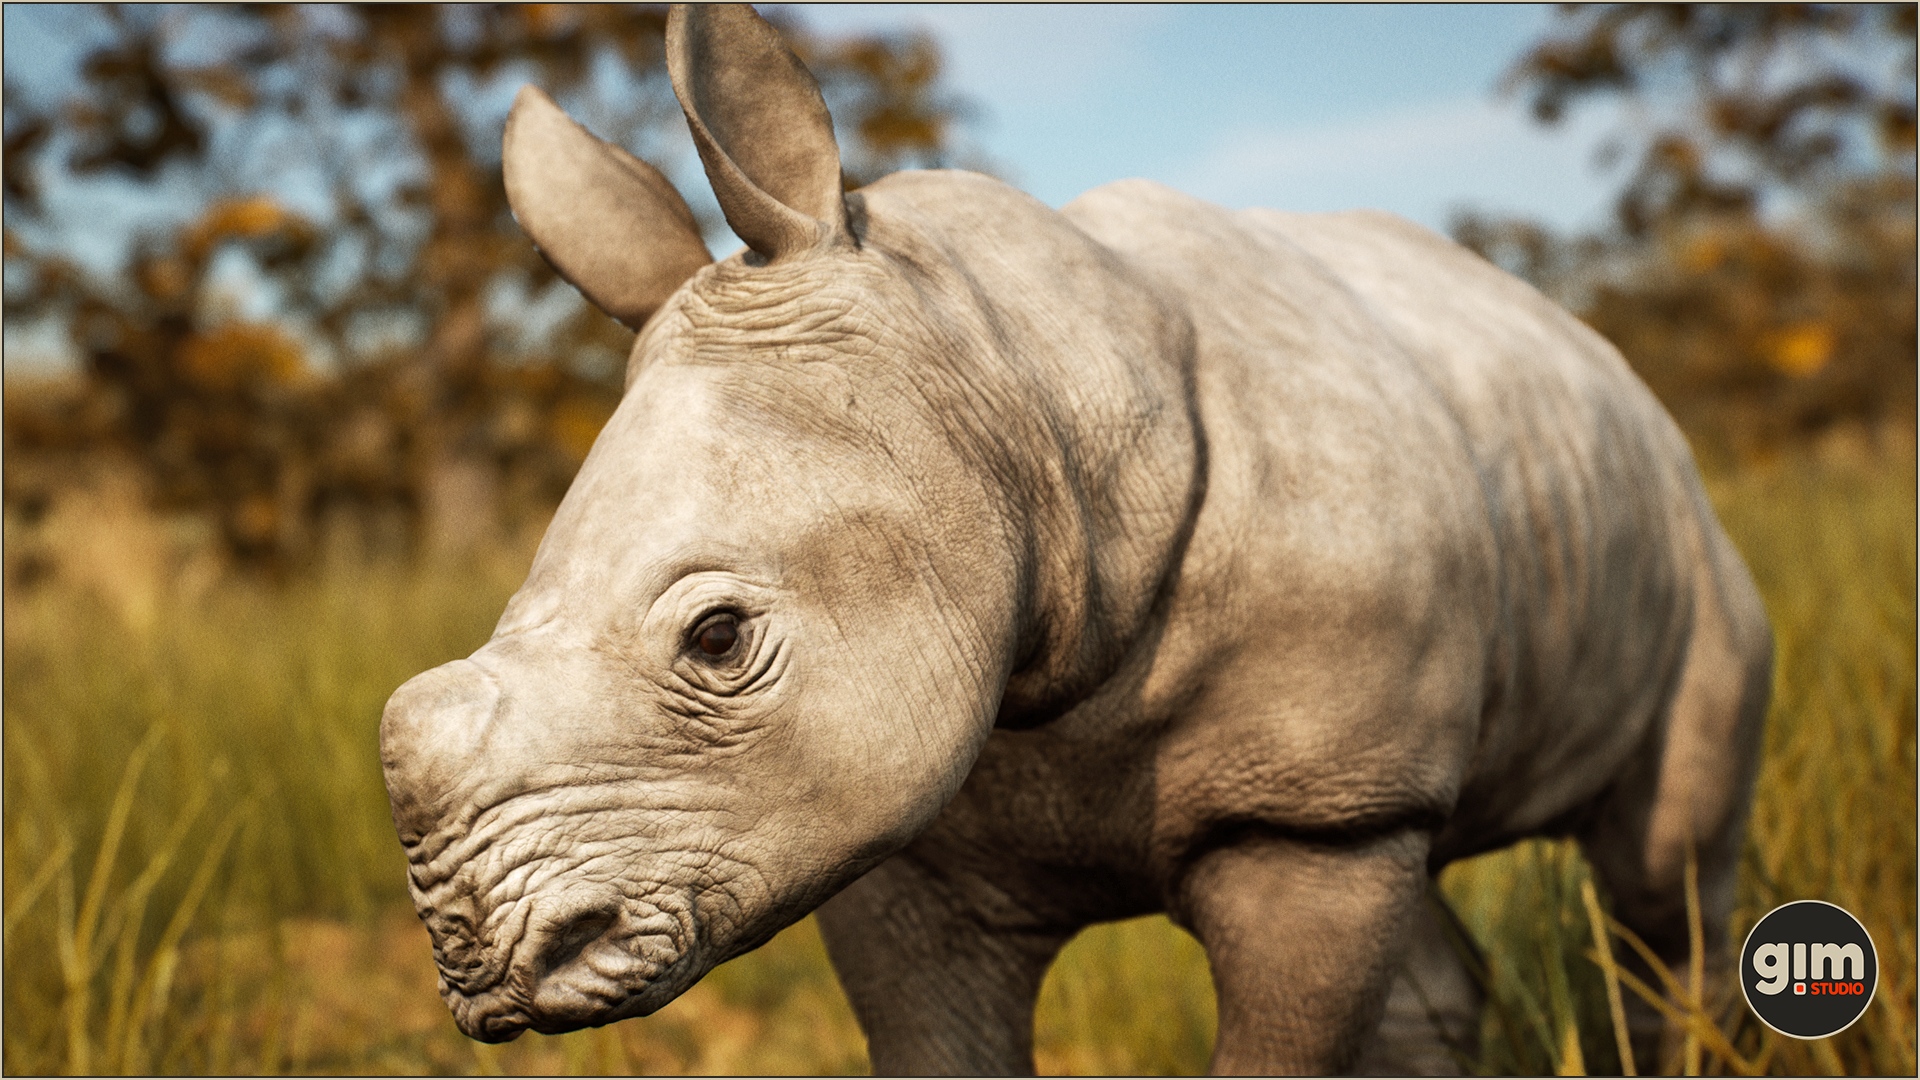 Photogenic young Rhino in close-up shot